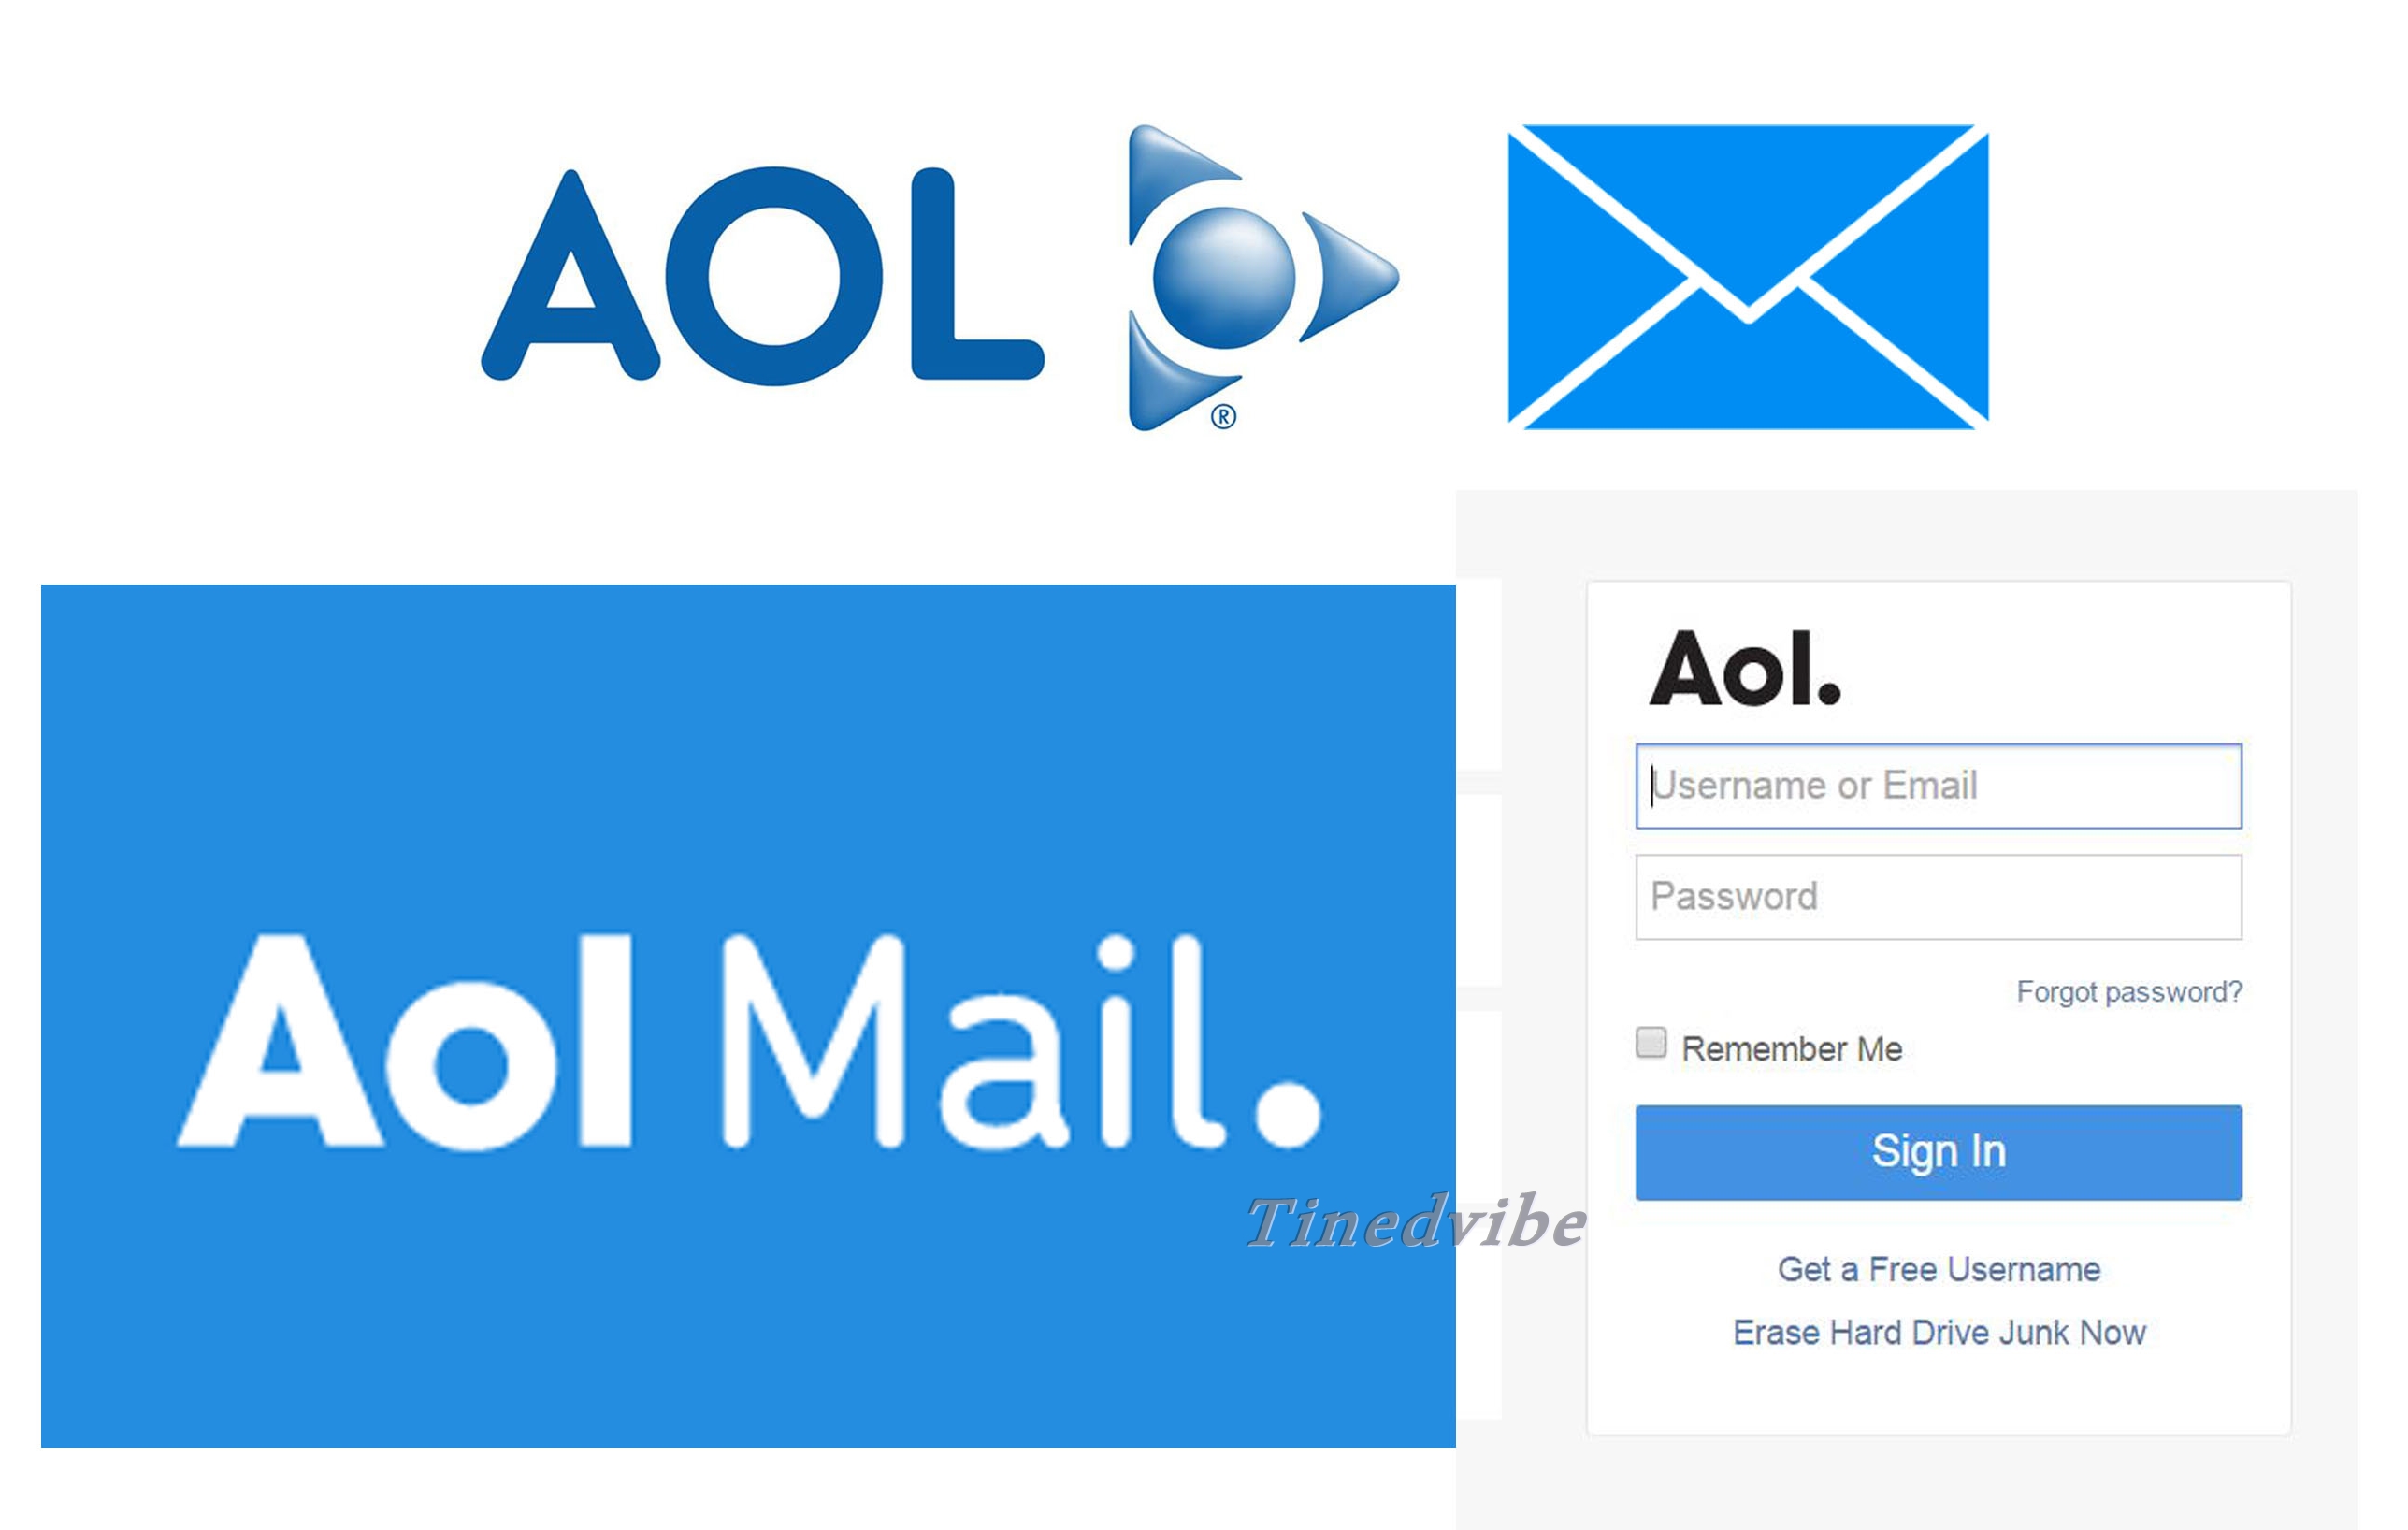 AOL email login